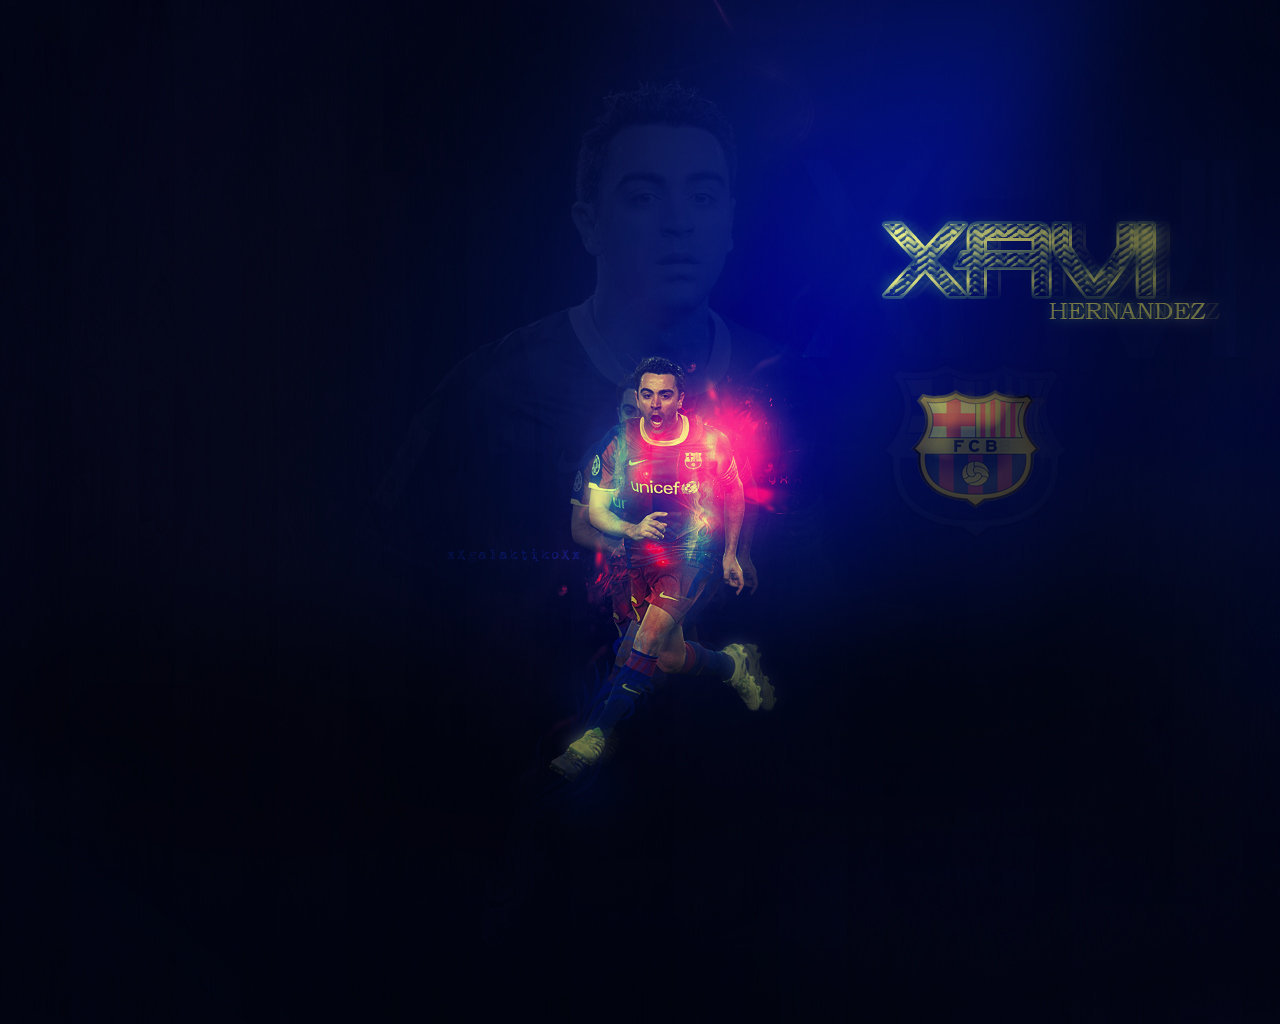 Xavi FC Barcelona Wallpaper - Xavi Hernandez Wallpaper (22601220) - Fanpop